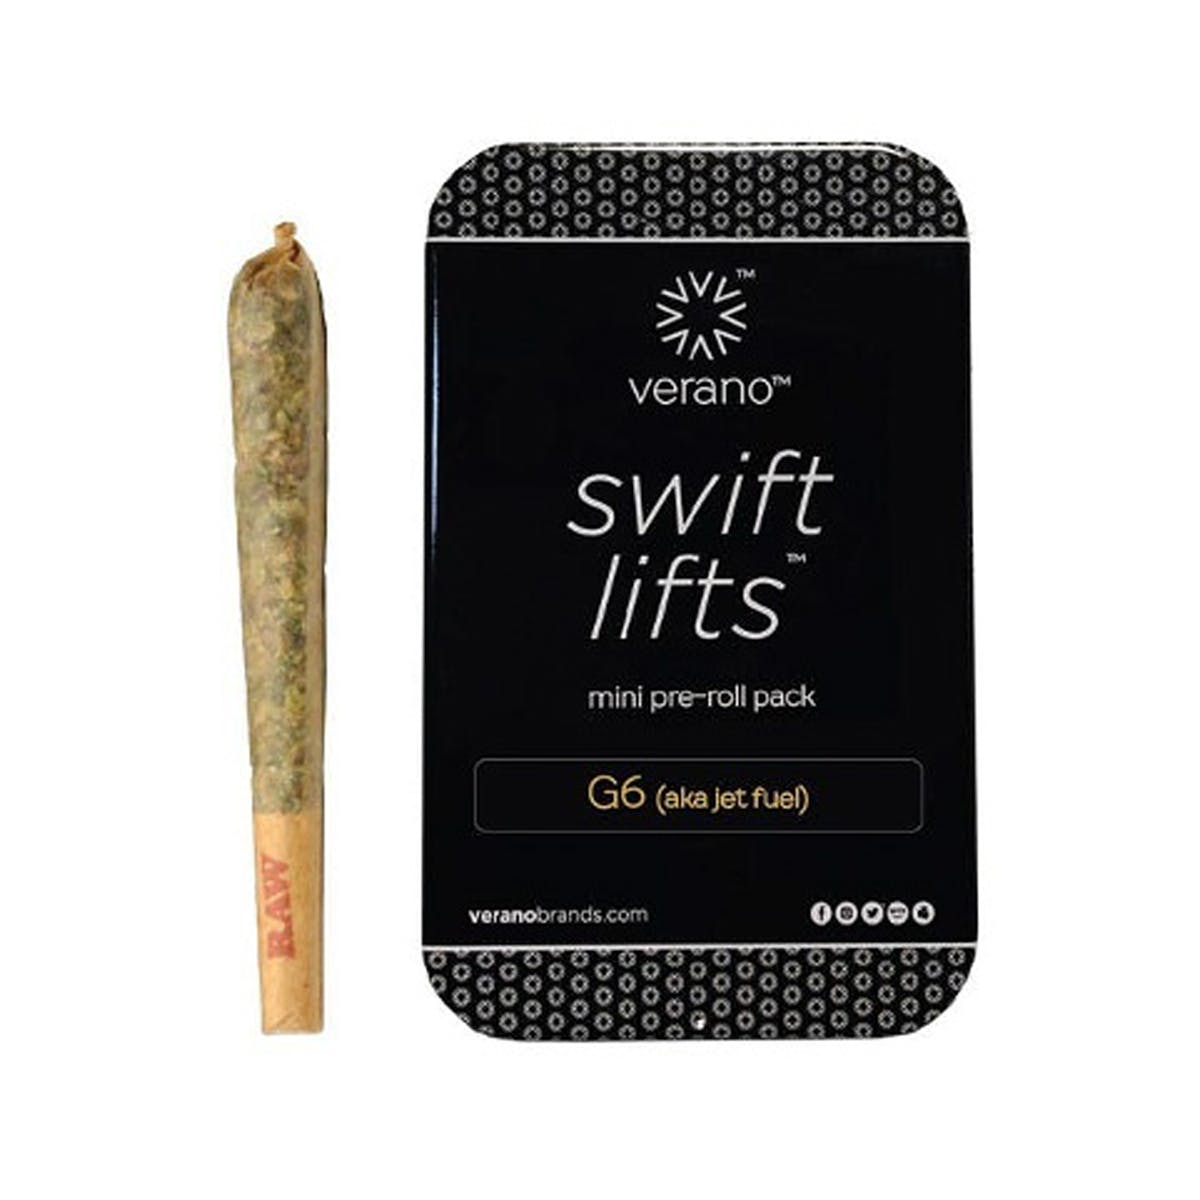 marijuana-dispensaries-curio-wellness-in-timonium-swift-liftsa-c2-84c-mini-pre-roll-pack-g6-jet-fuel